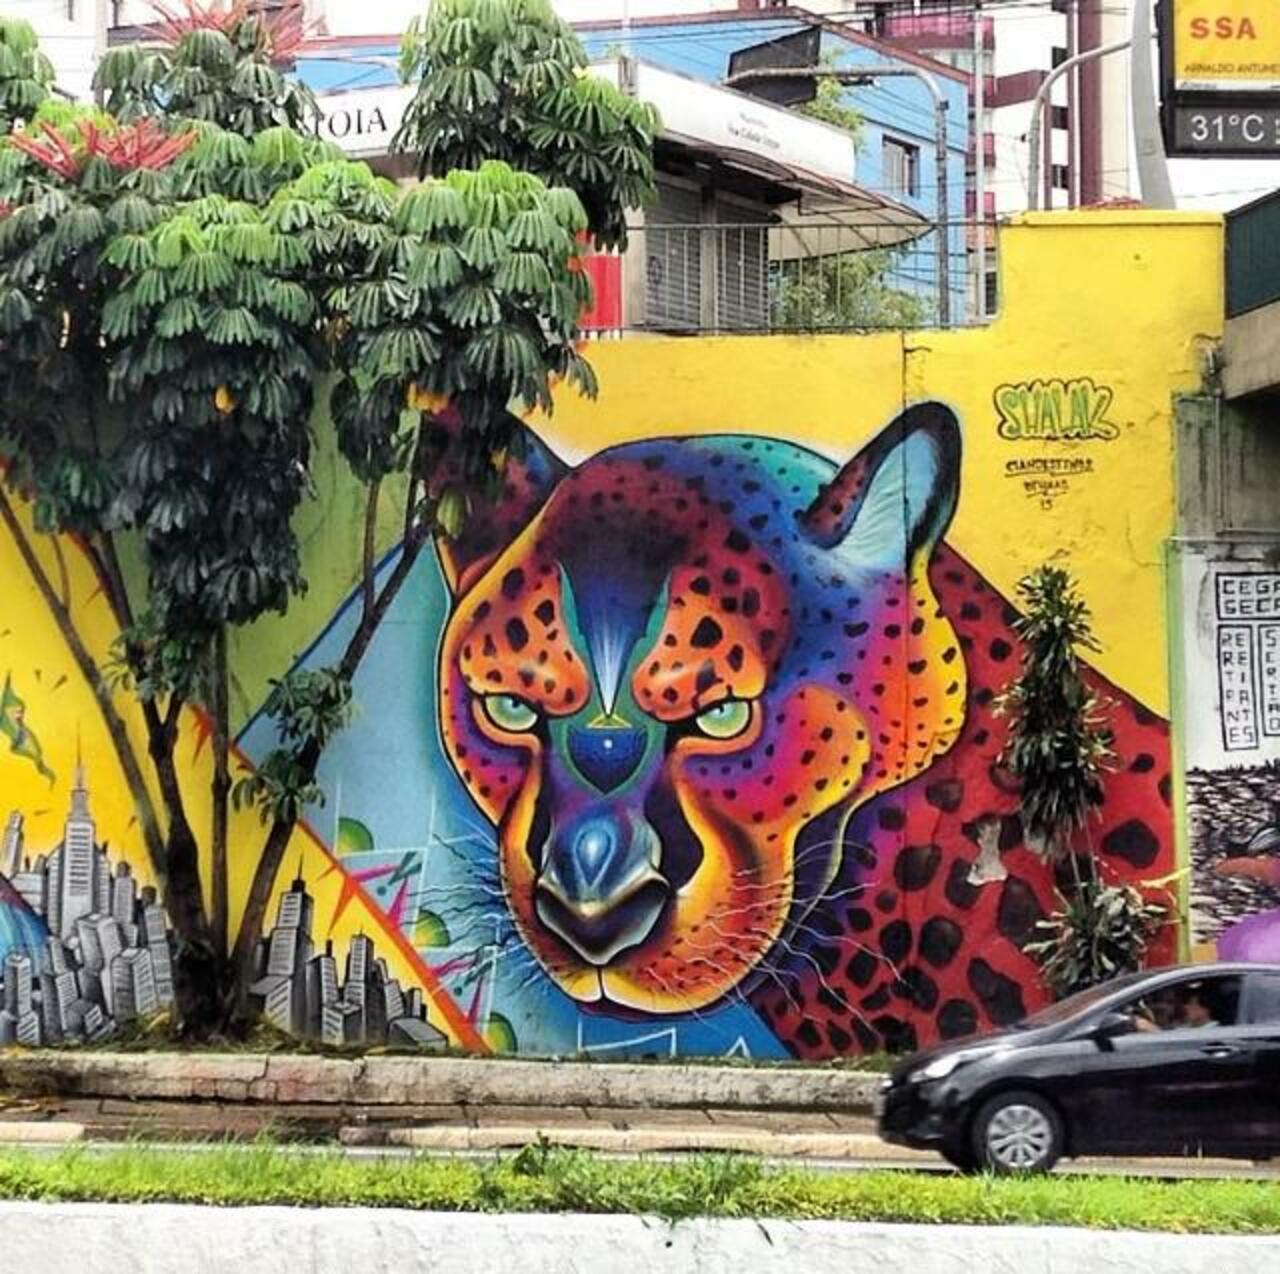 Artist ShalakAttack beautiful & colourful nature in Street Art piece in São Paulo 

#art #graffiti #mural #streetart http://t.co/Jwco1WyQuE